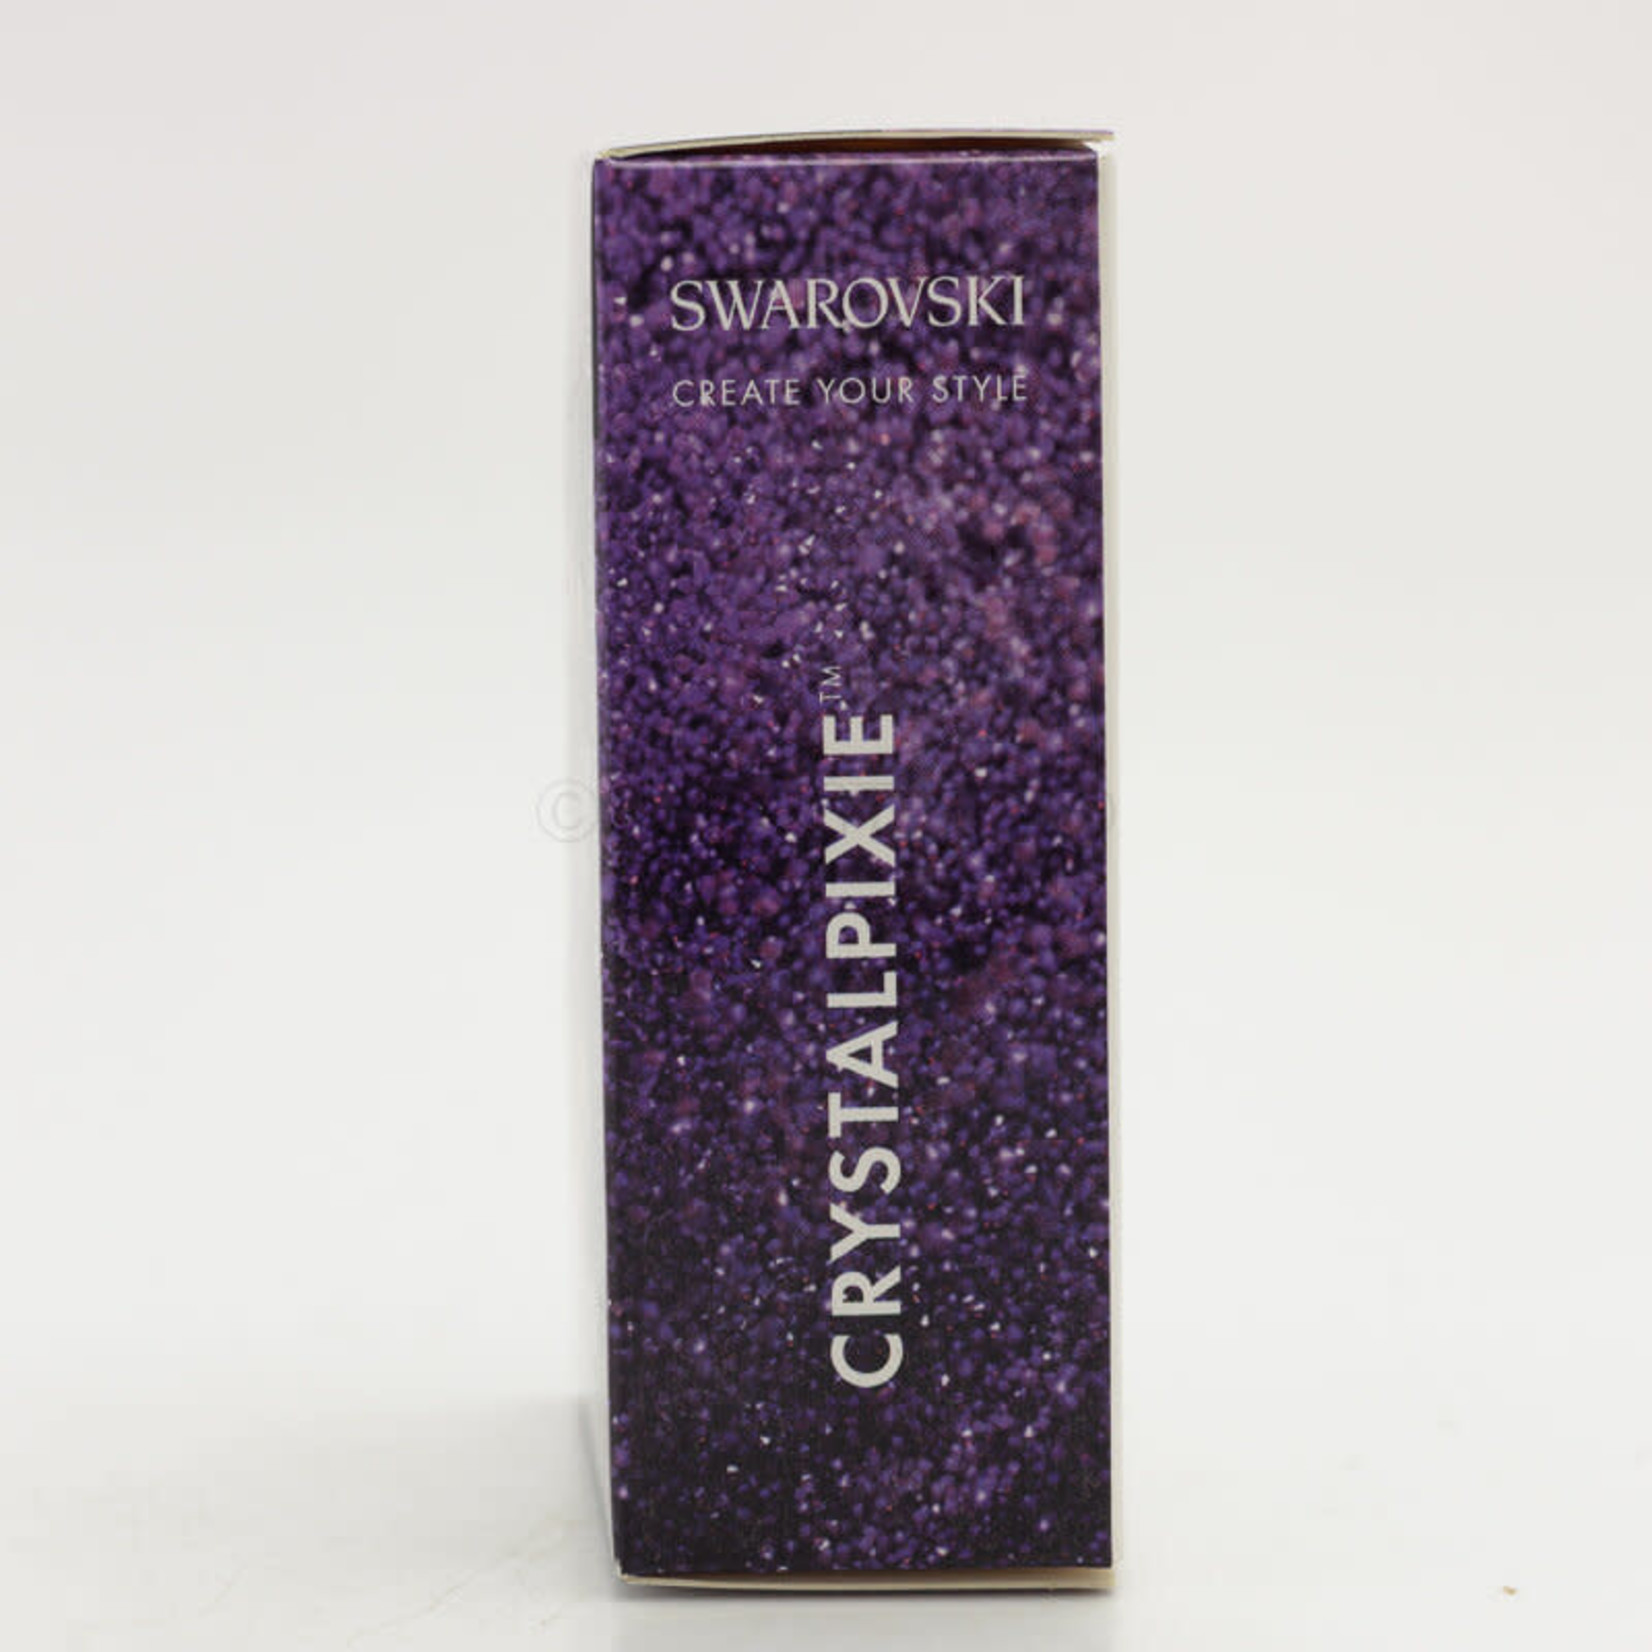 Swarovski Swarovski - Crystalpixie - Edge - Blossom Purple - 5g